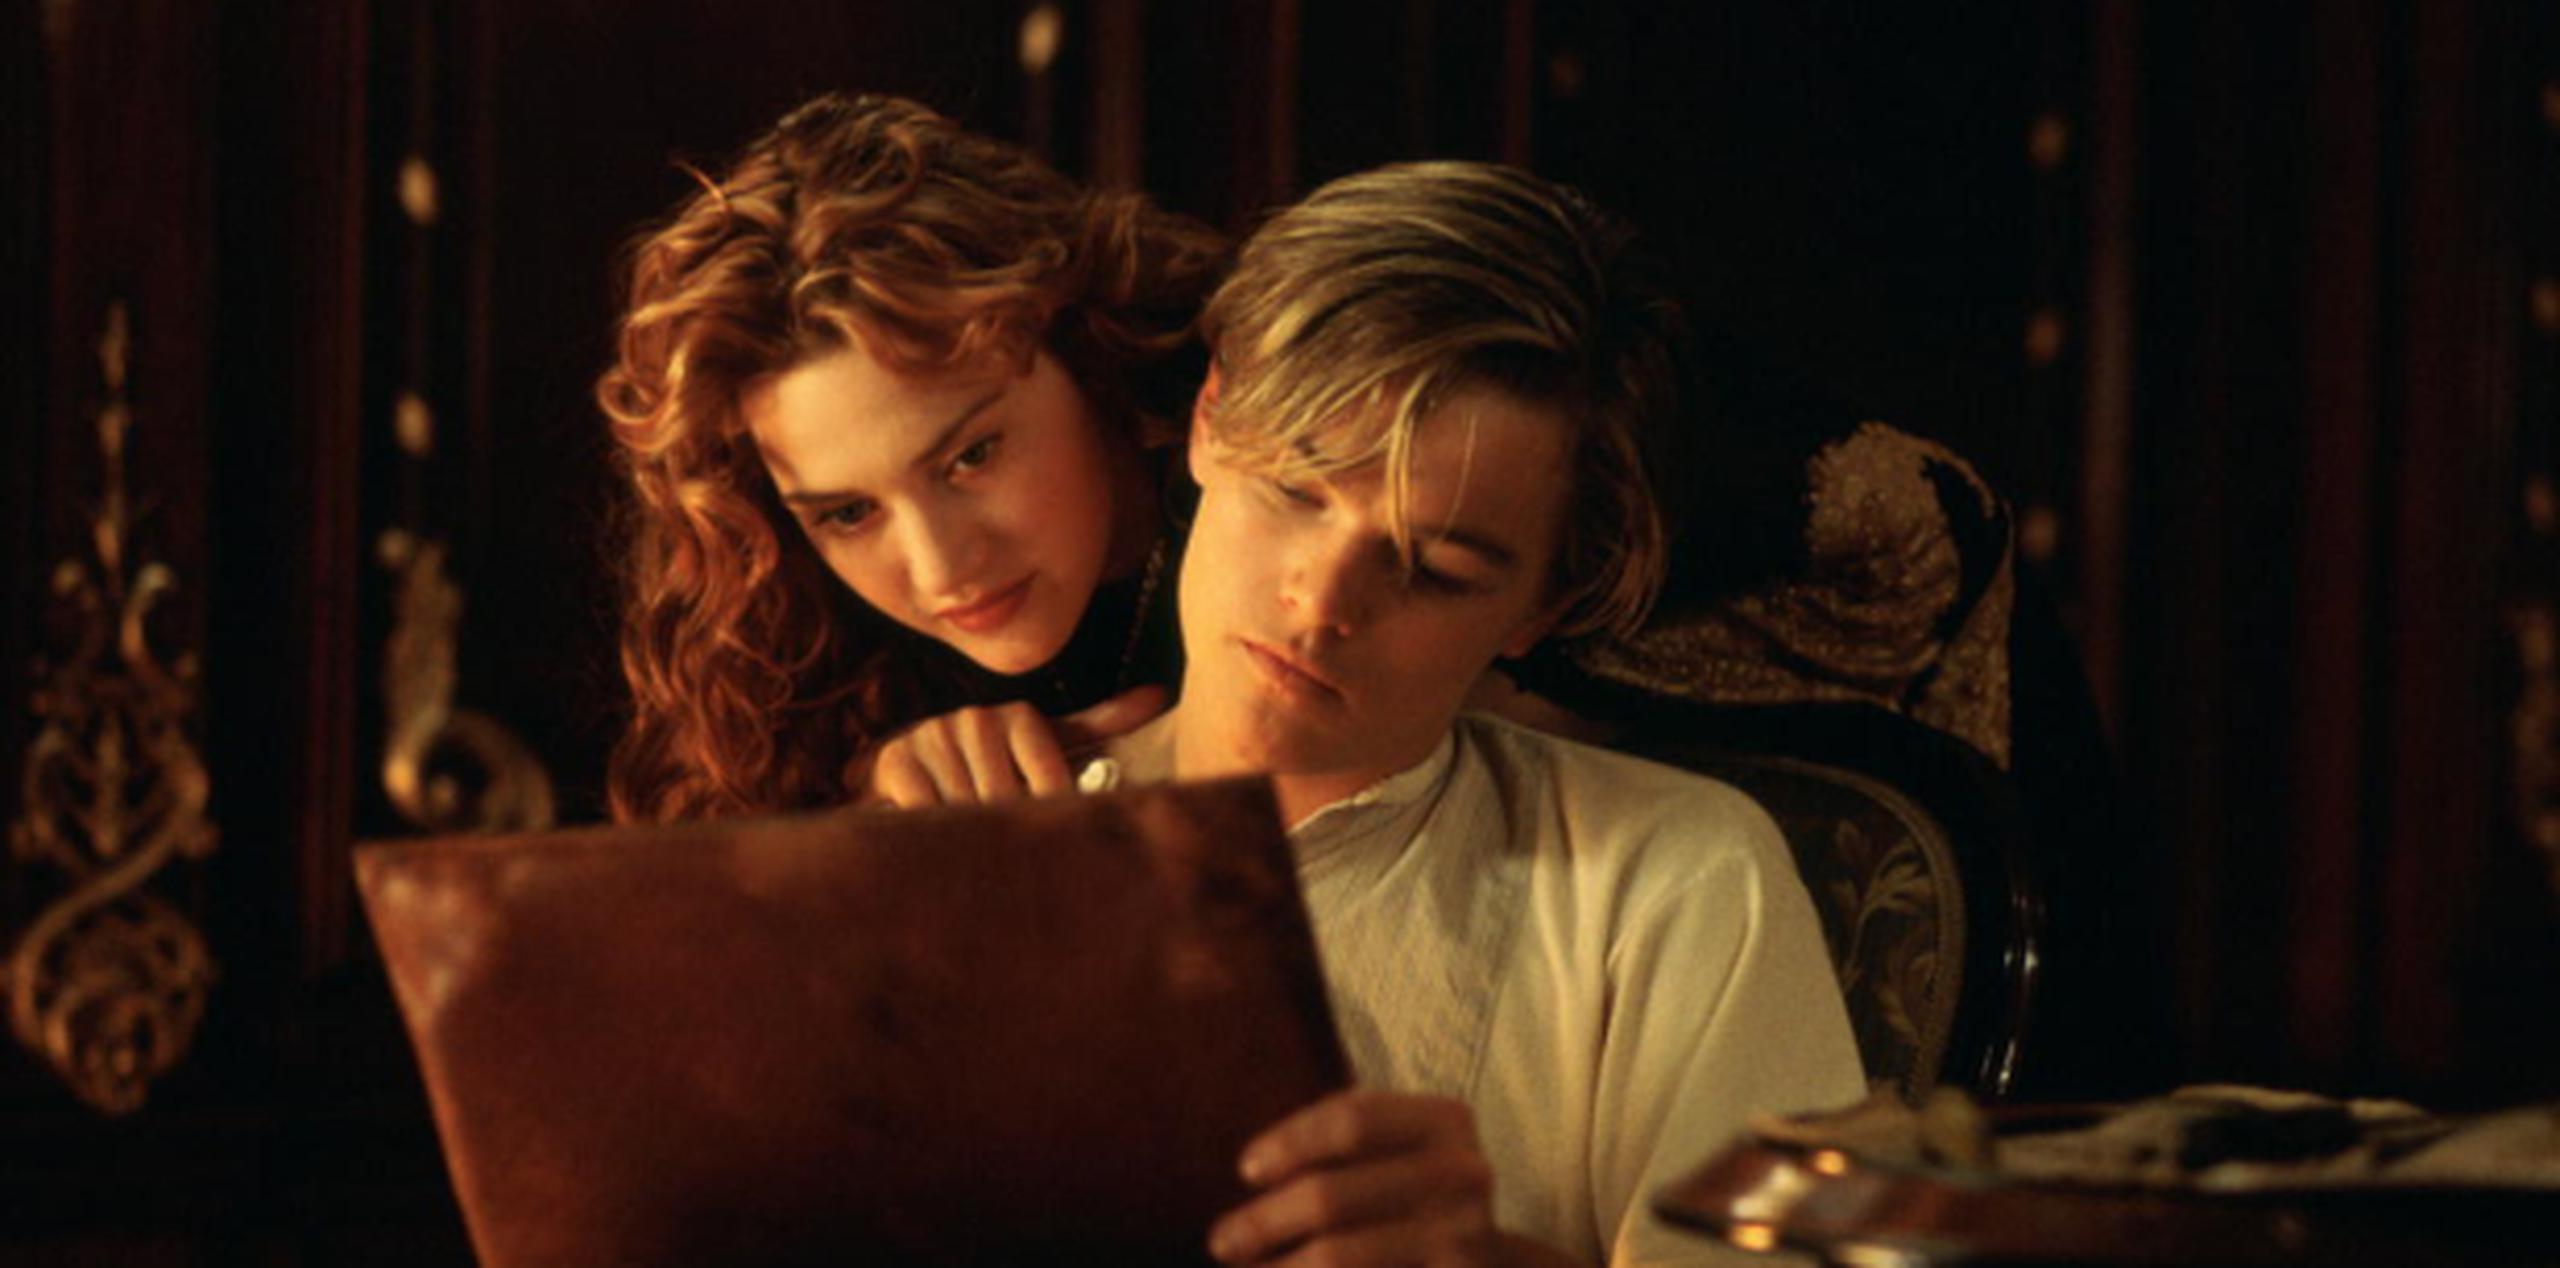 Kate Winsle y Leonardo DiCaprio en "Titanic". (Lightstorm Entertainment / Paramount Pictures / 20th Century Fox)